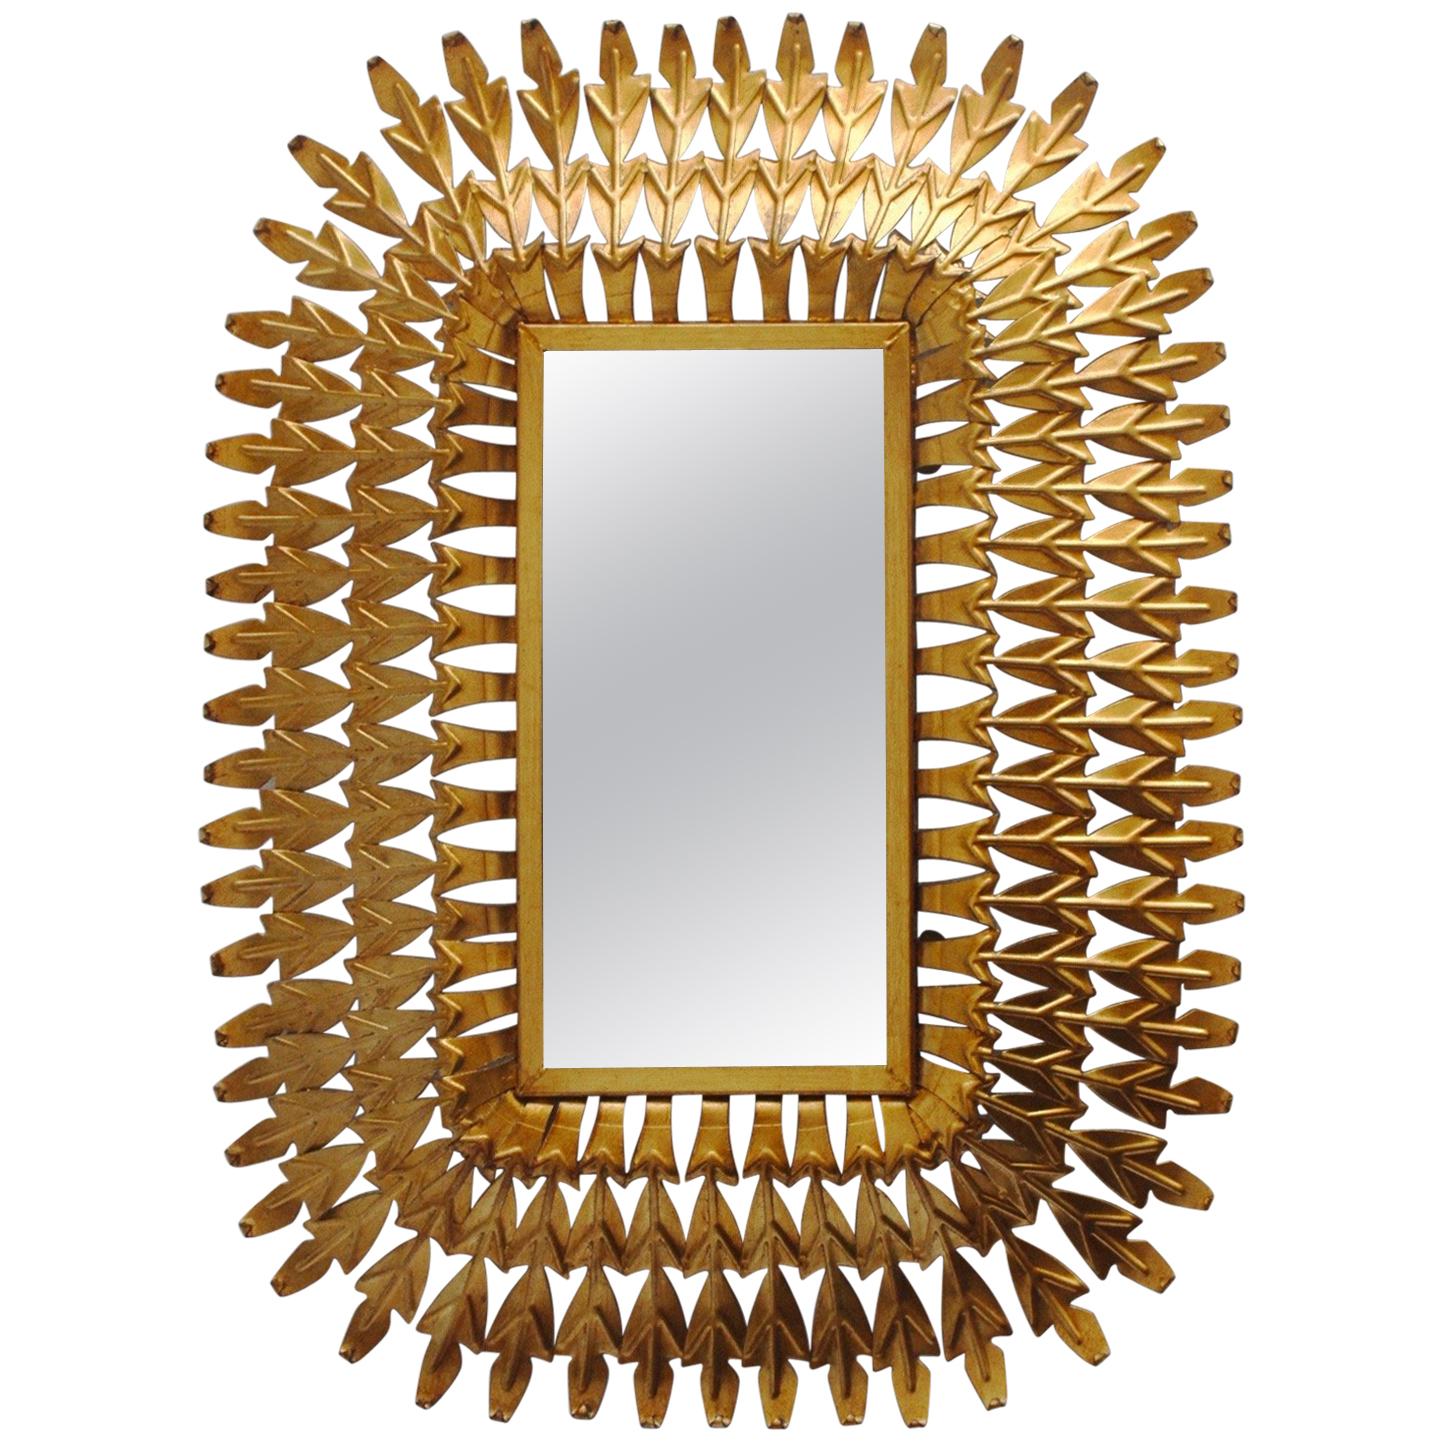 Midcentury Rectangular Gilt/Gold Leaf Sunburst Iron Wall Mirror, 1950s For Sale